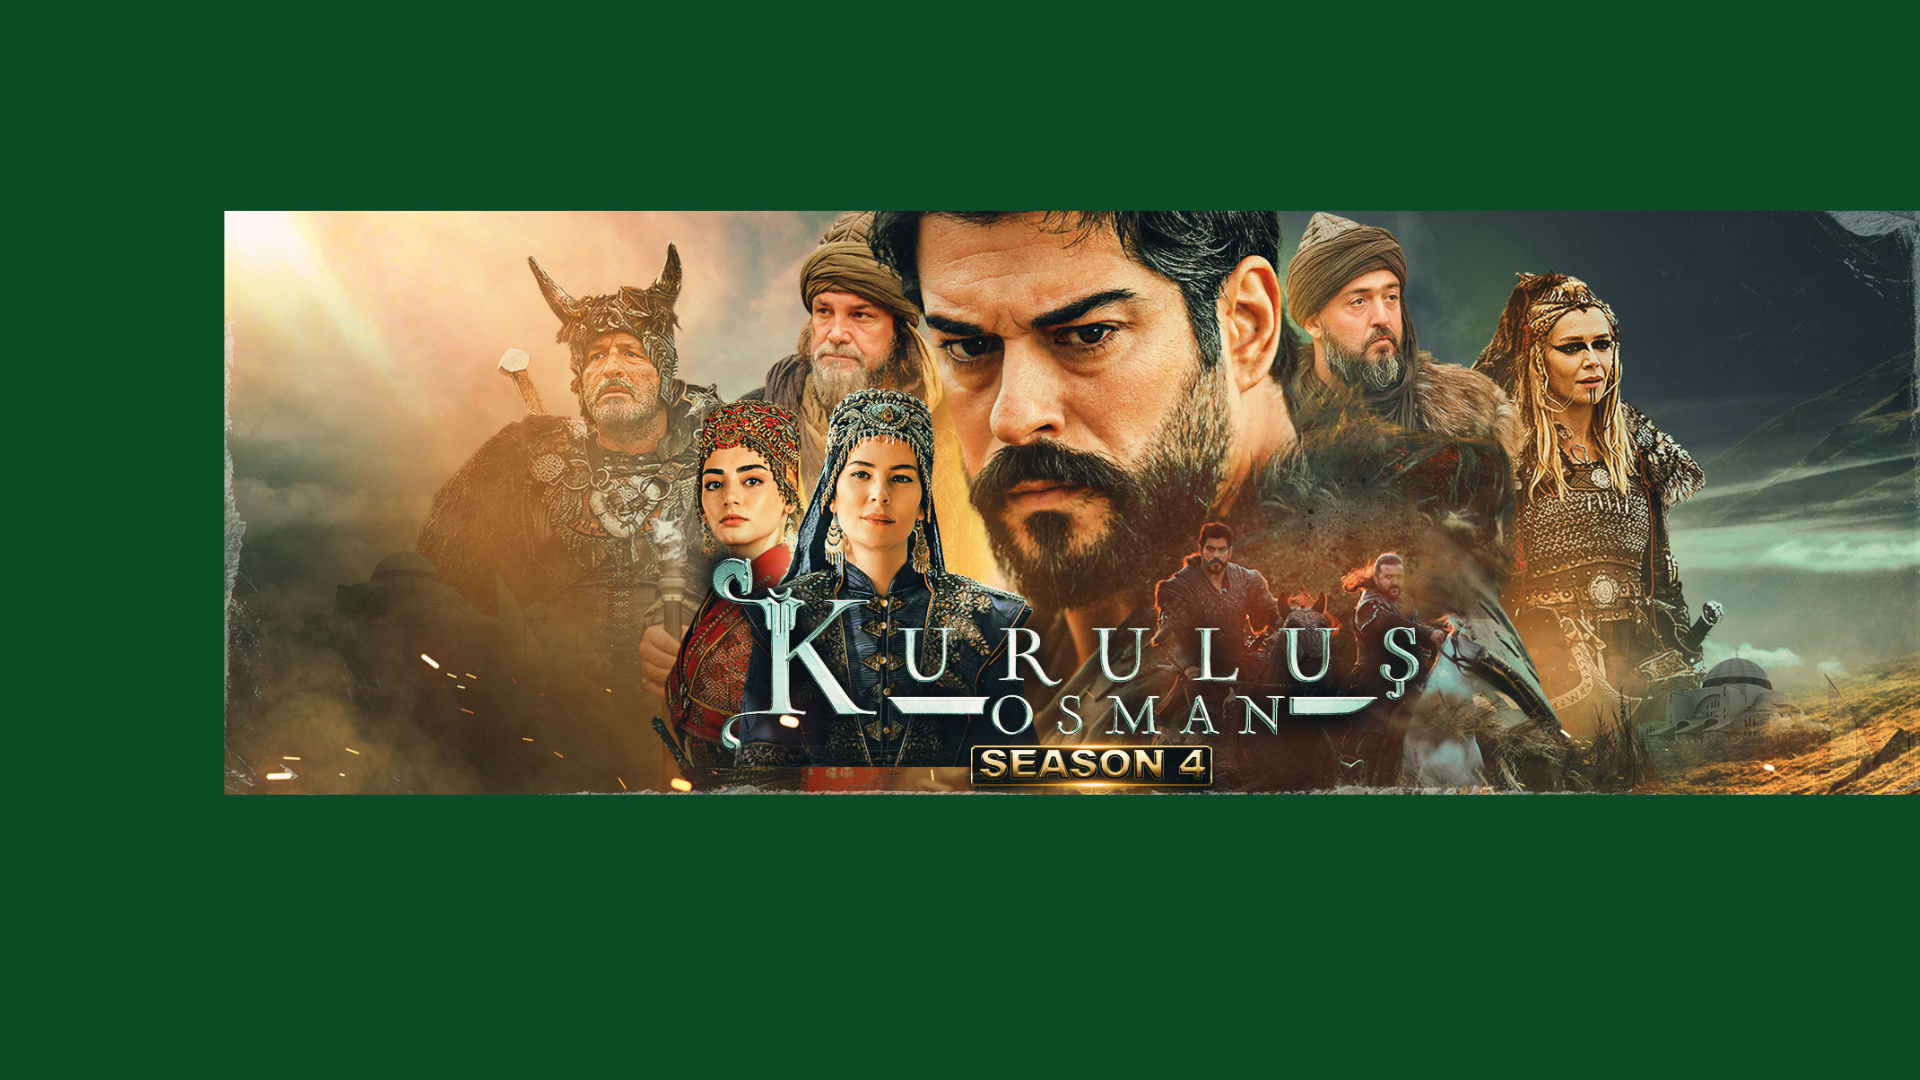 Kurulus Osman Season 4